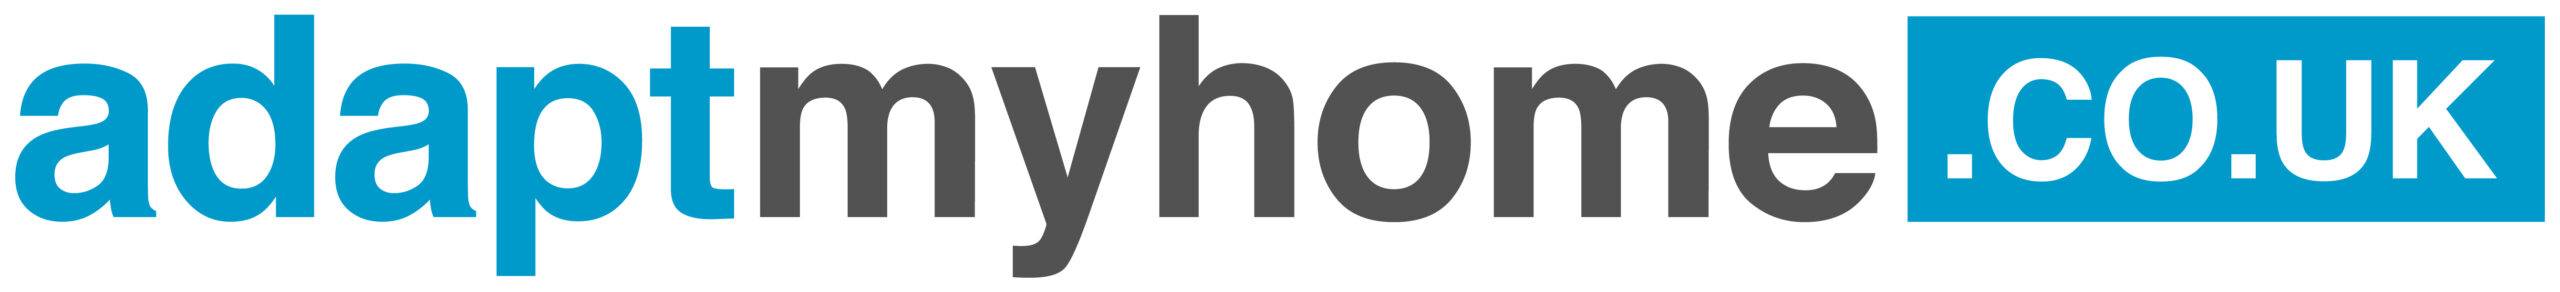 Adaptmyhome Logo 3